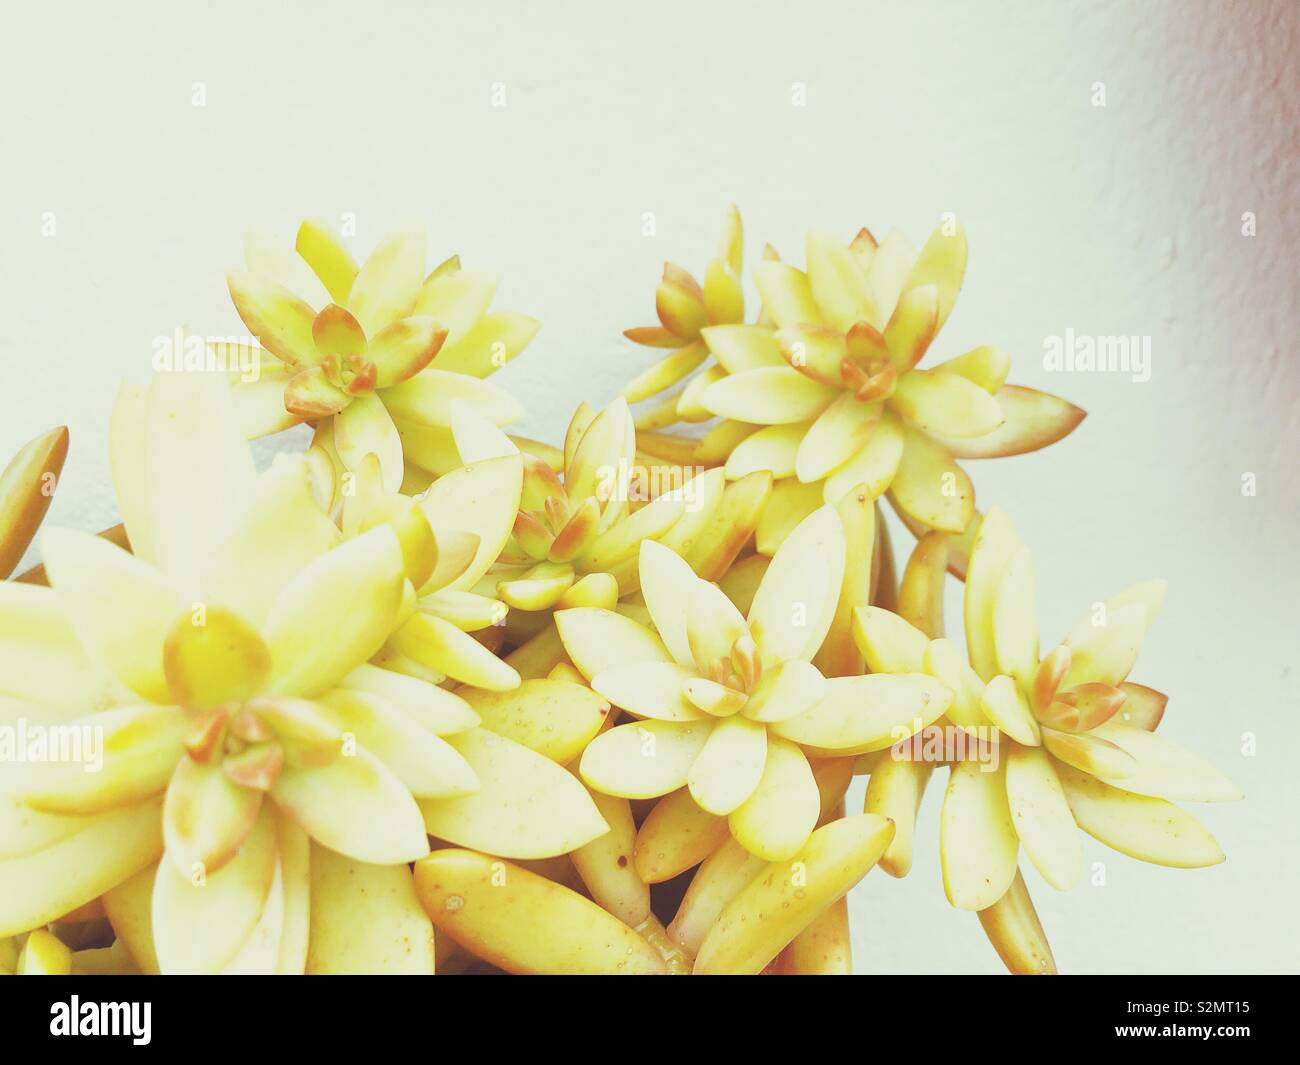 Yellow succulent plant close up Stock Photo - Alamy